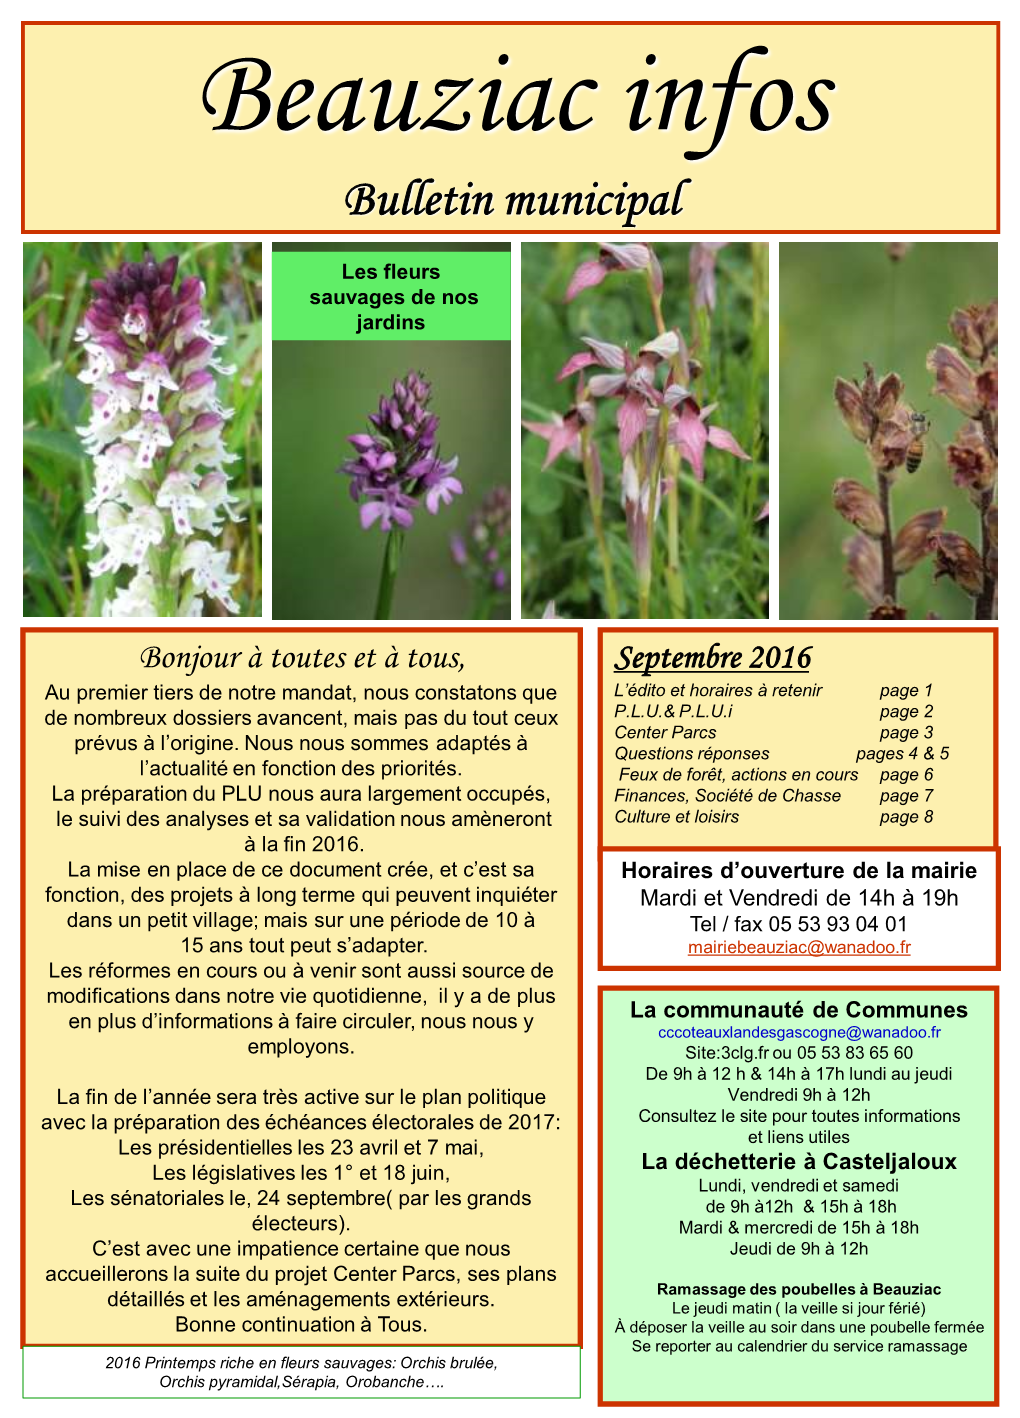 Beauziac Infos Bulletin Municipal